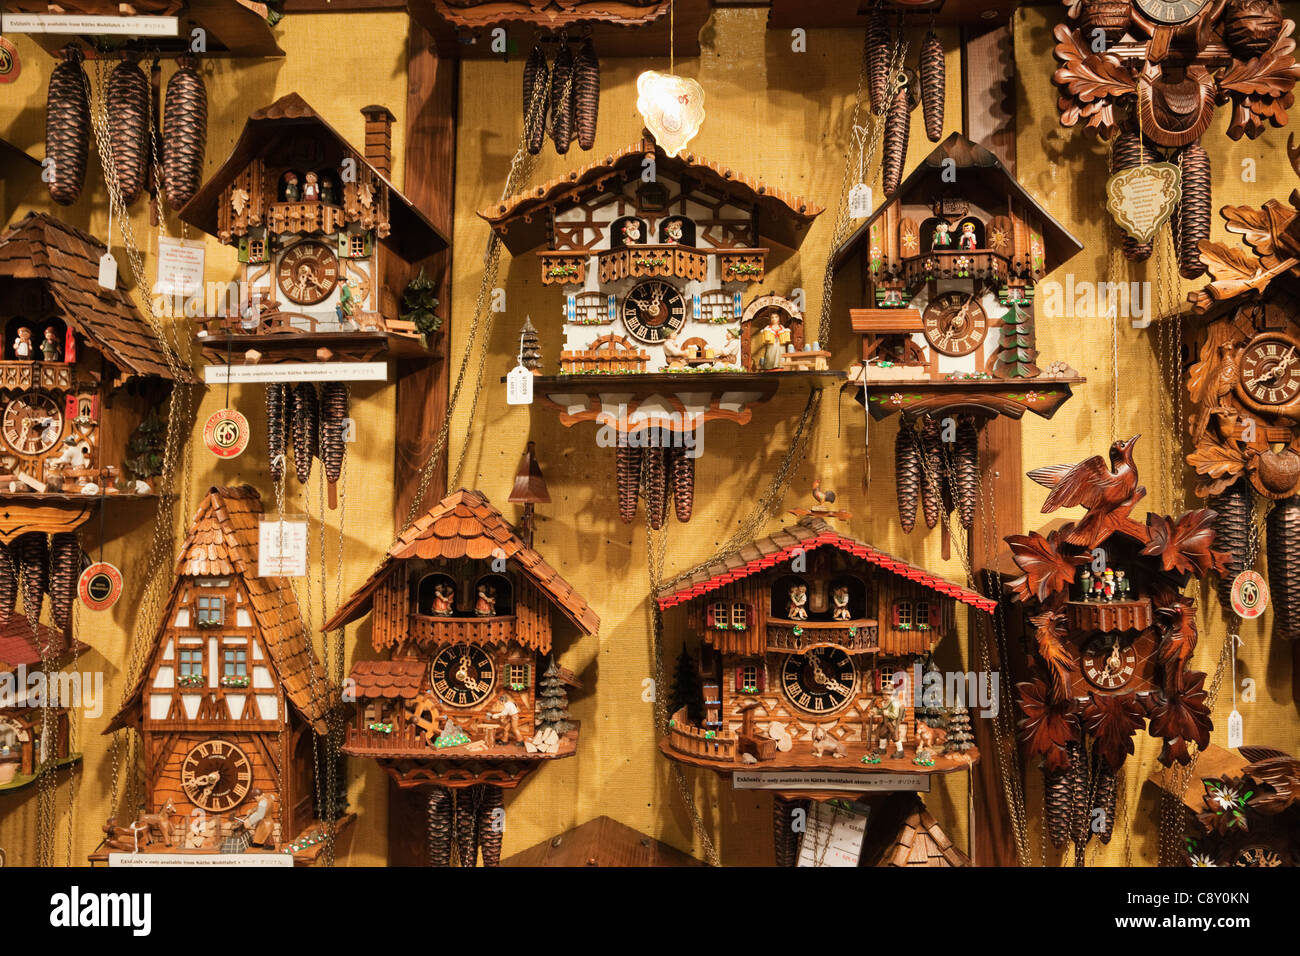 In Germania, in Baviera, la Strada Romantica, Rothenburg ob der Tauber, Kathe G. Wohlfart Shop di Natale Display interno Foto Stock